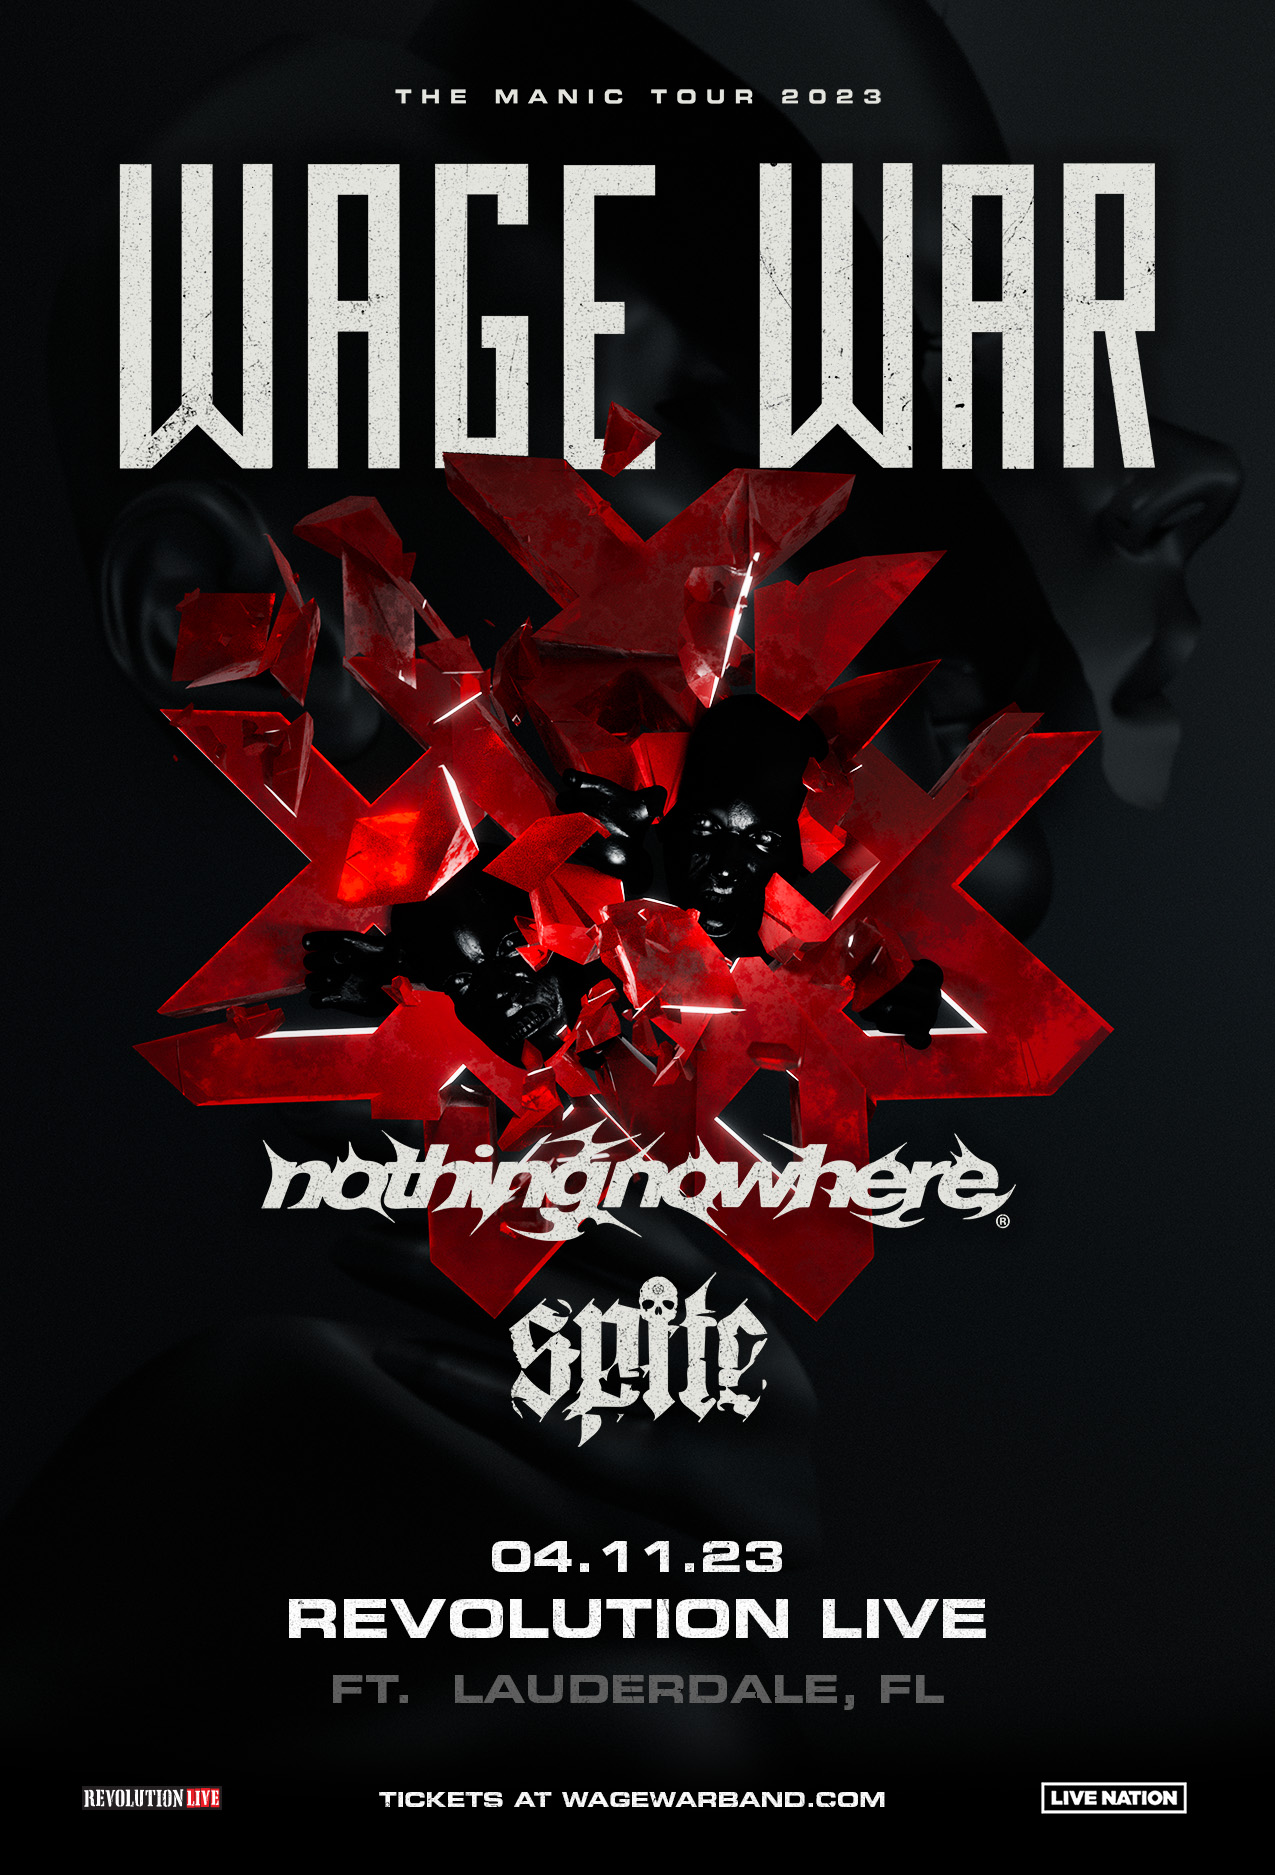 Wage War – The Manic Tour